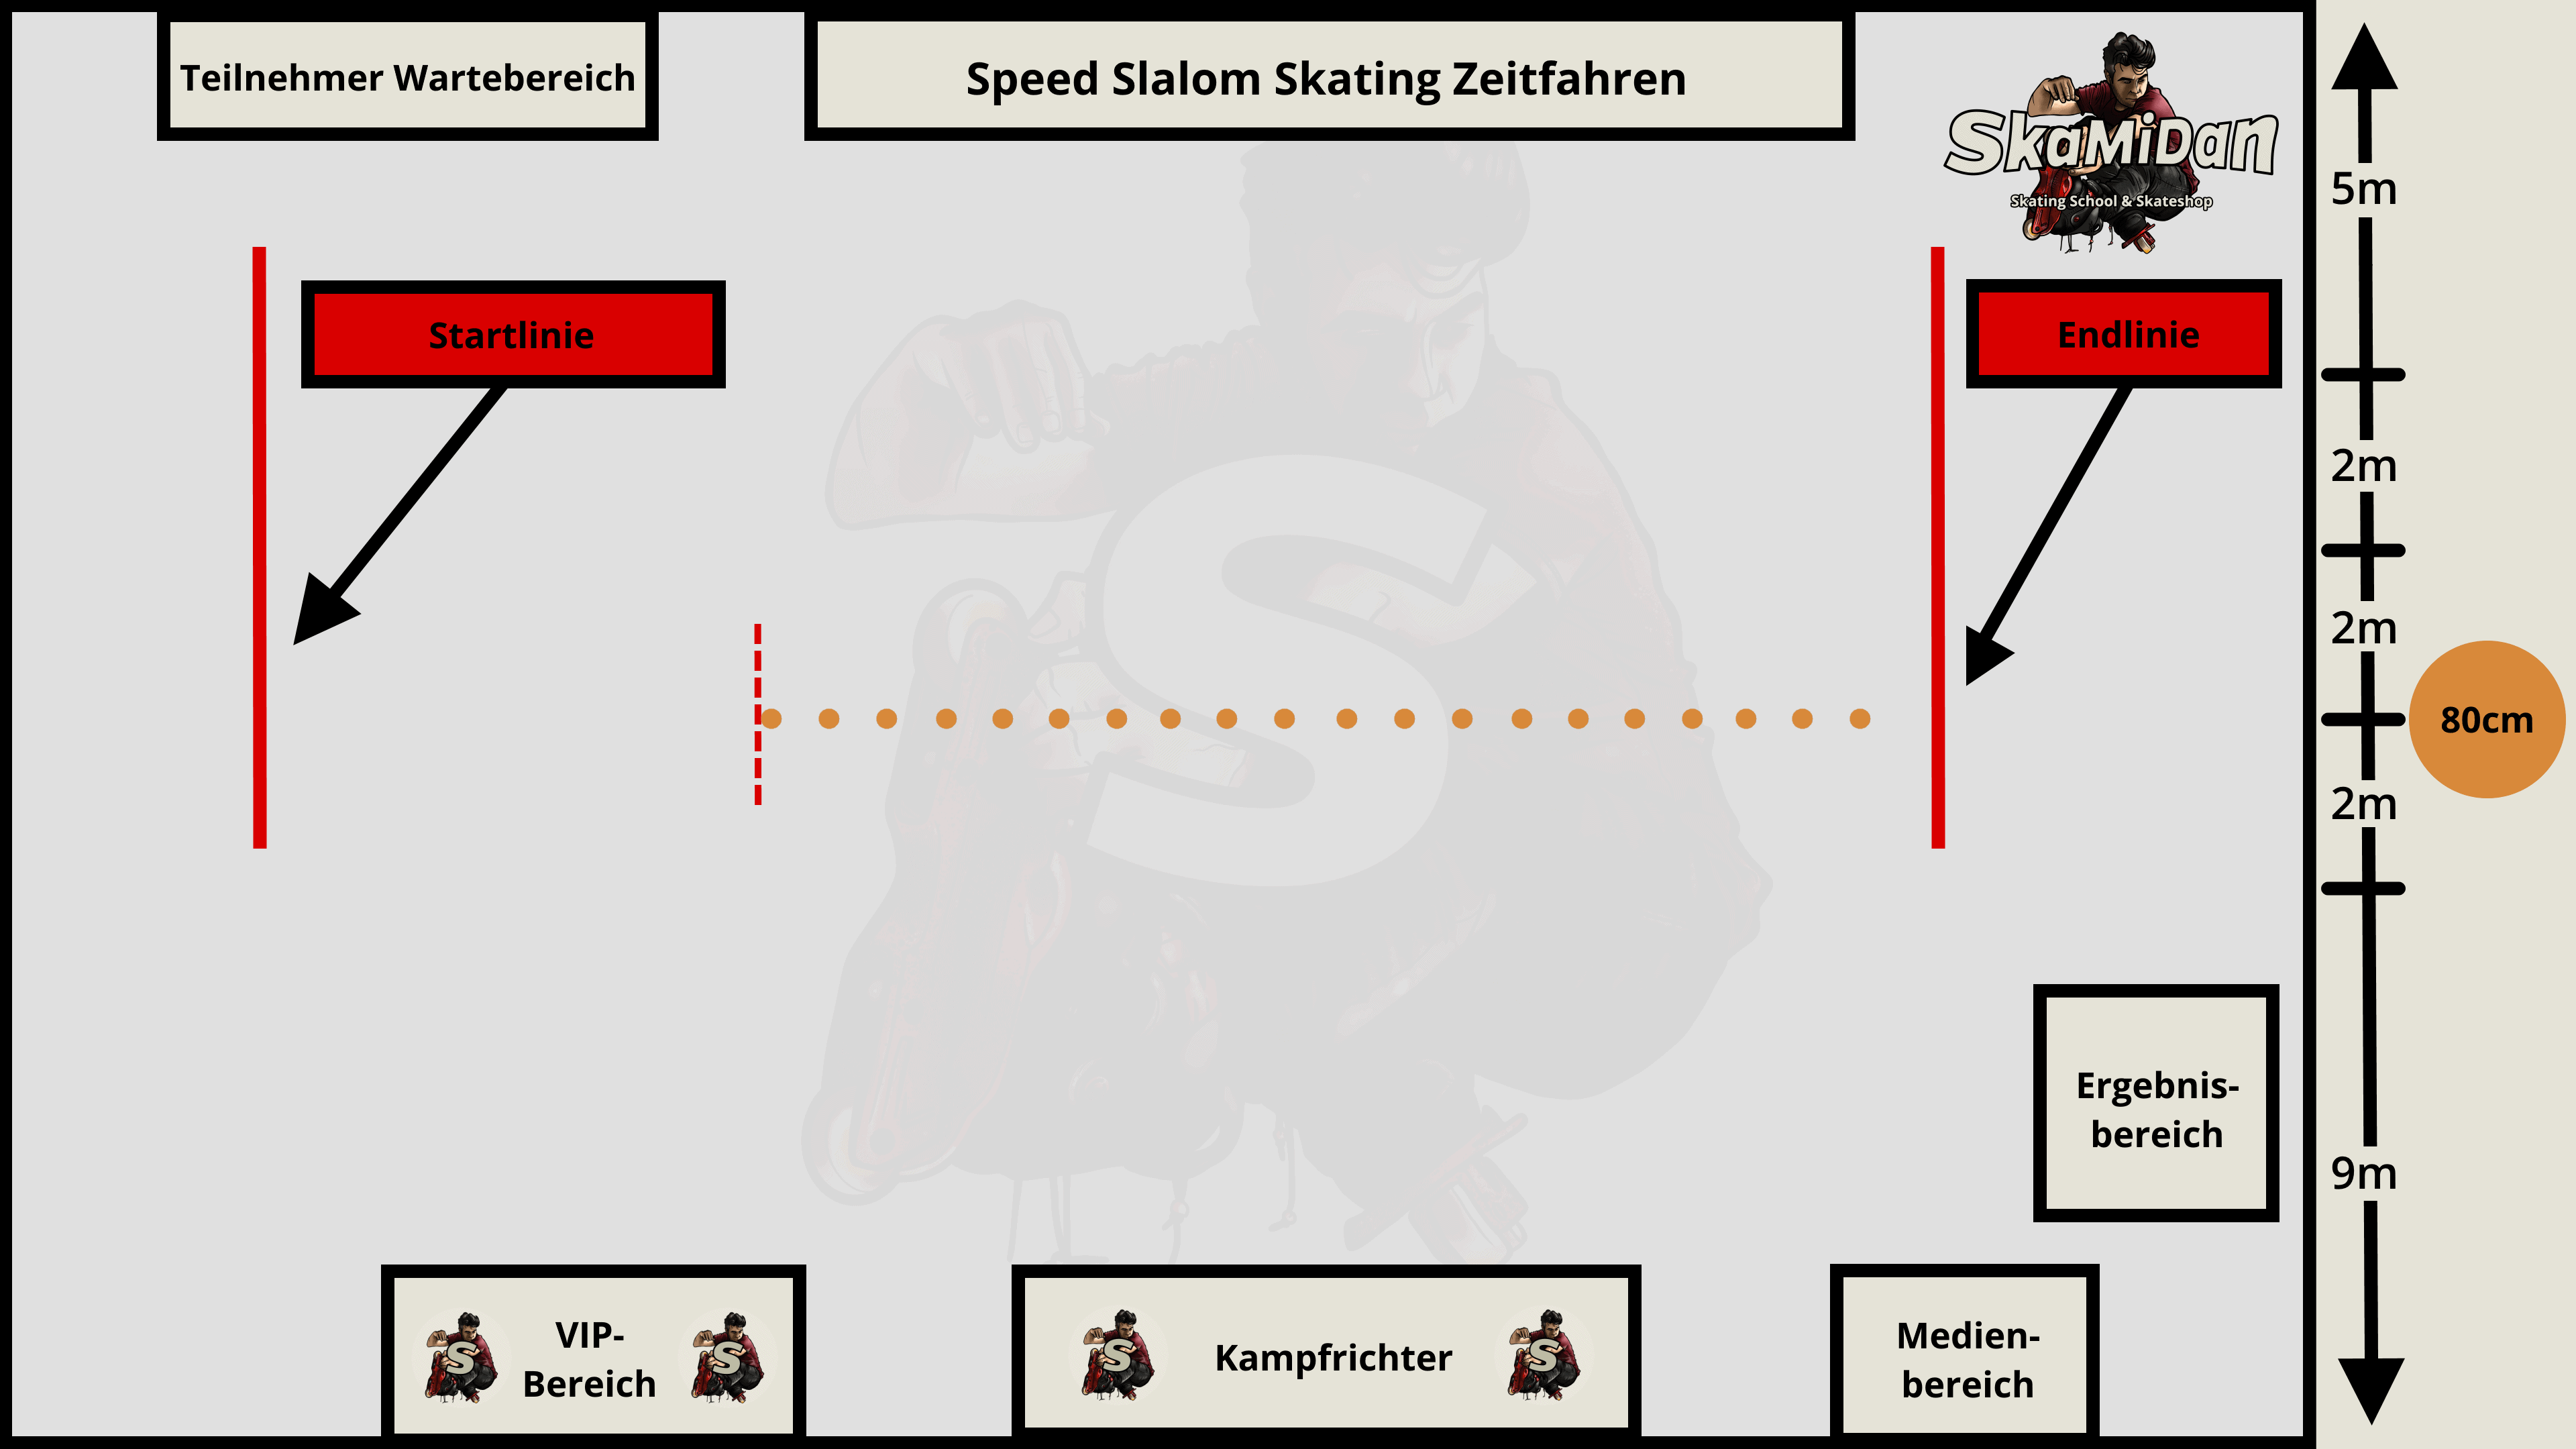 SkaMiDan_Freestyle-Slalom-Skating_Regelaufstellung_Freestyle-Slalom-Skating_Inline-Speed-Slalom-Skating-Zeitfahren_DE